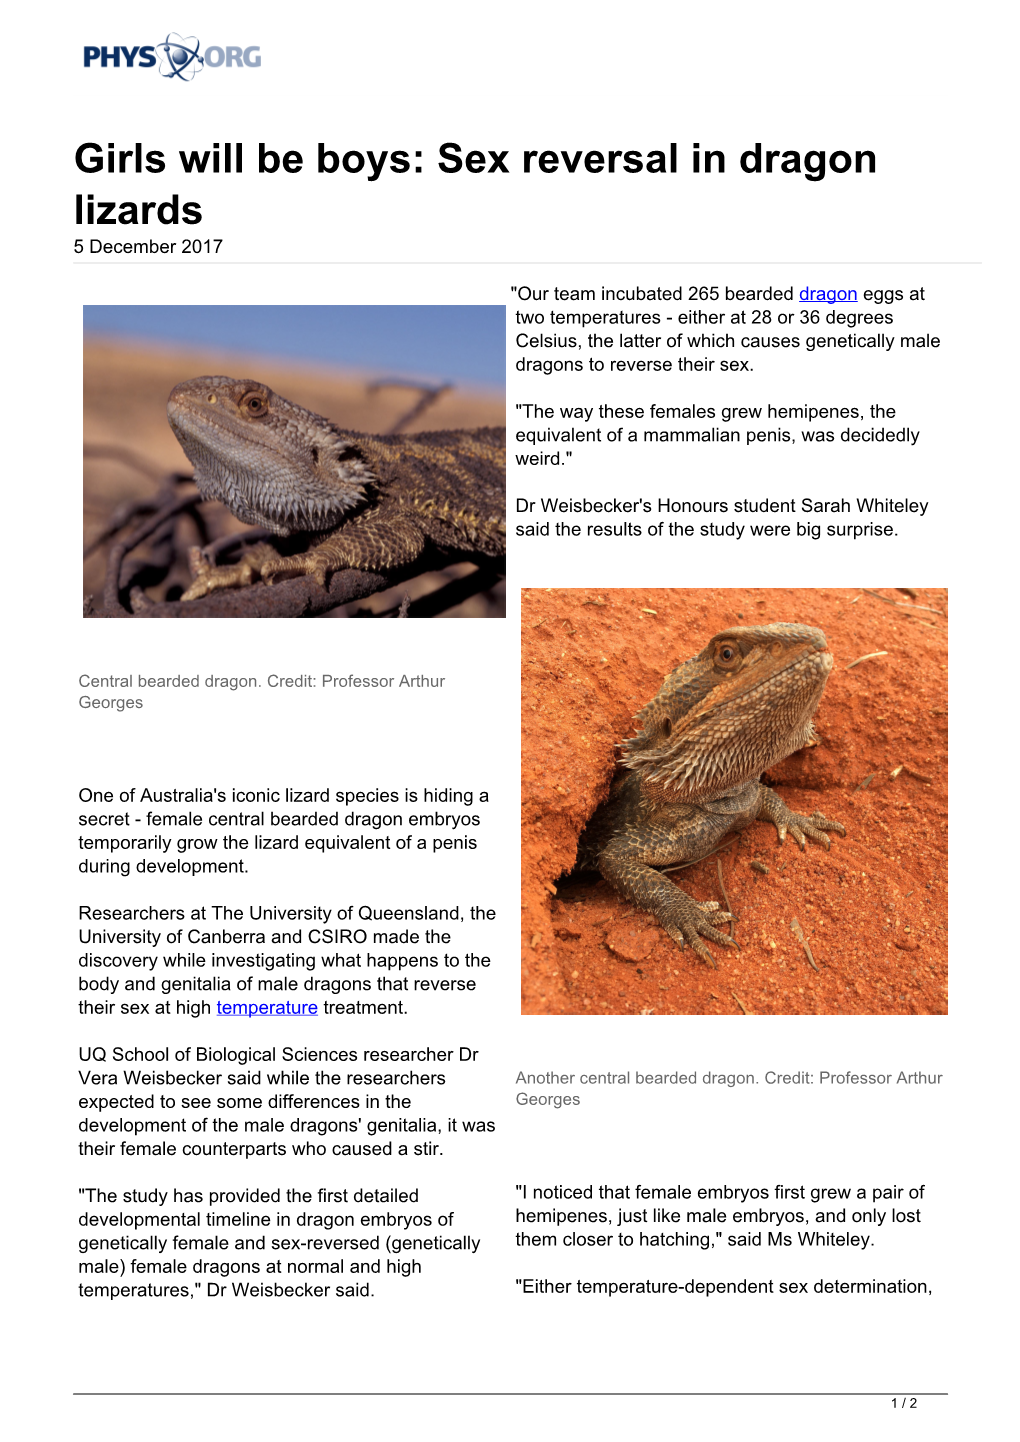 Sex Reversal in Dragon Lizards 5 December 2017